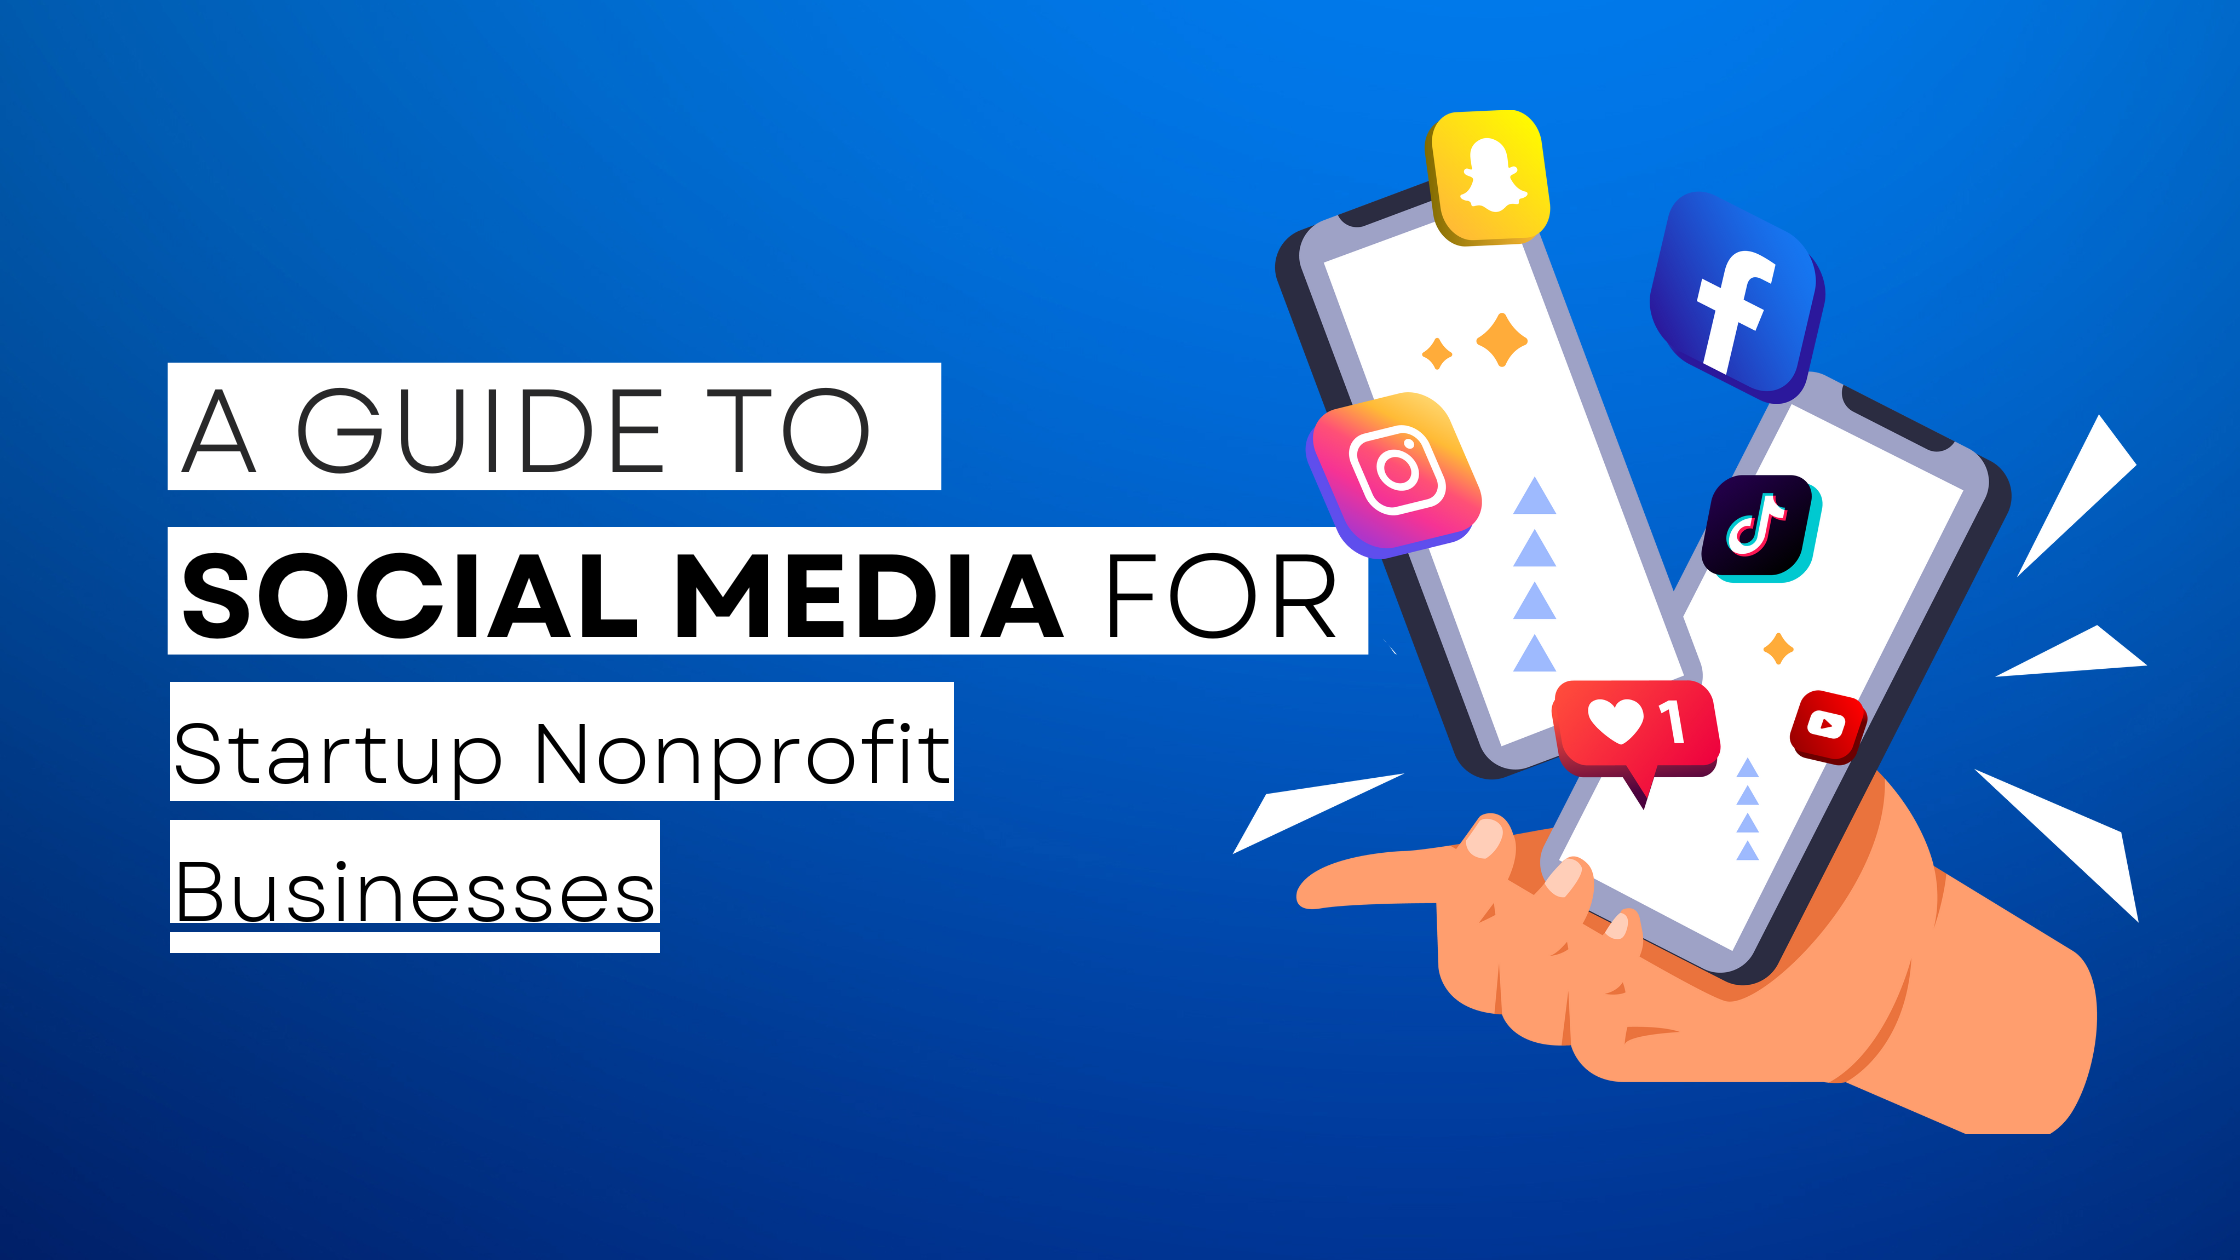 How to start Startup Nonprofit on social media